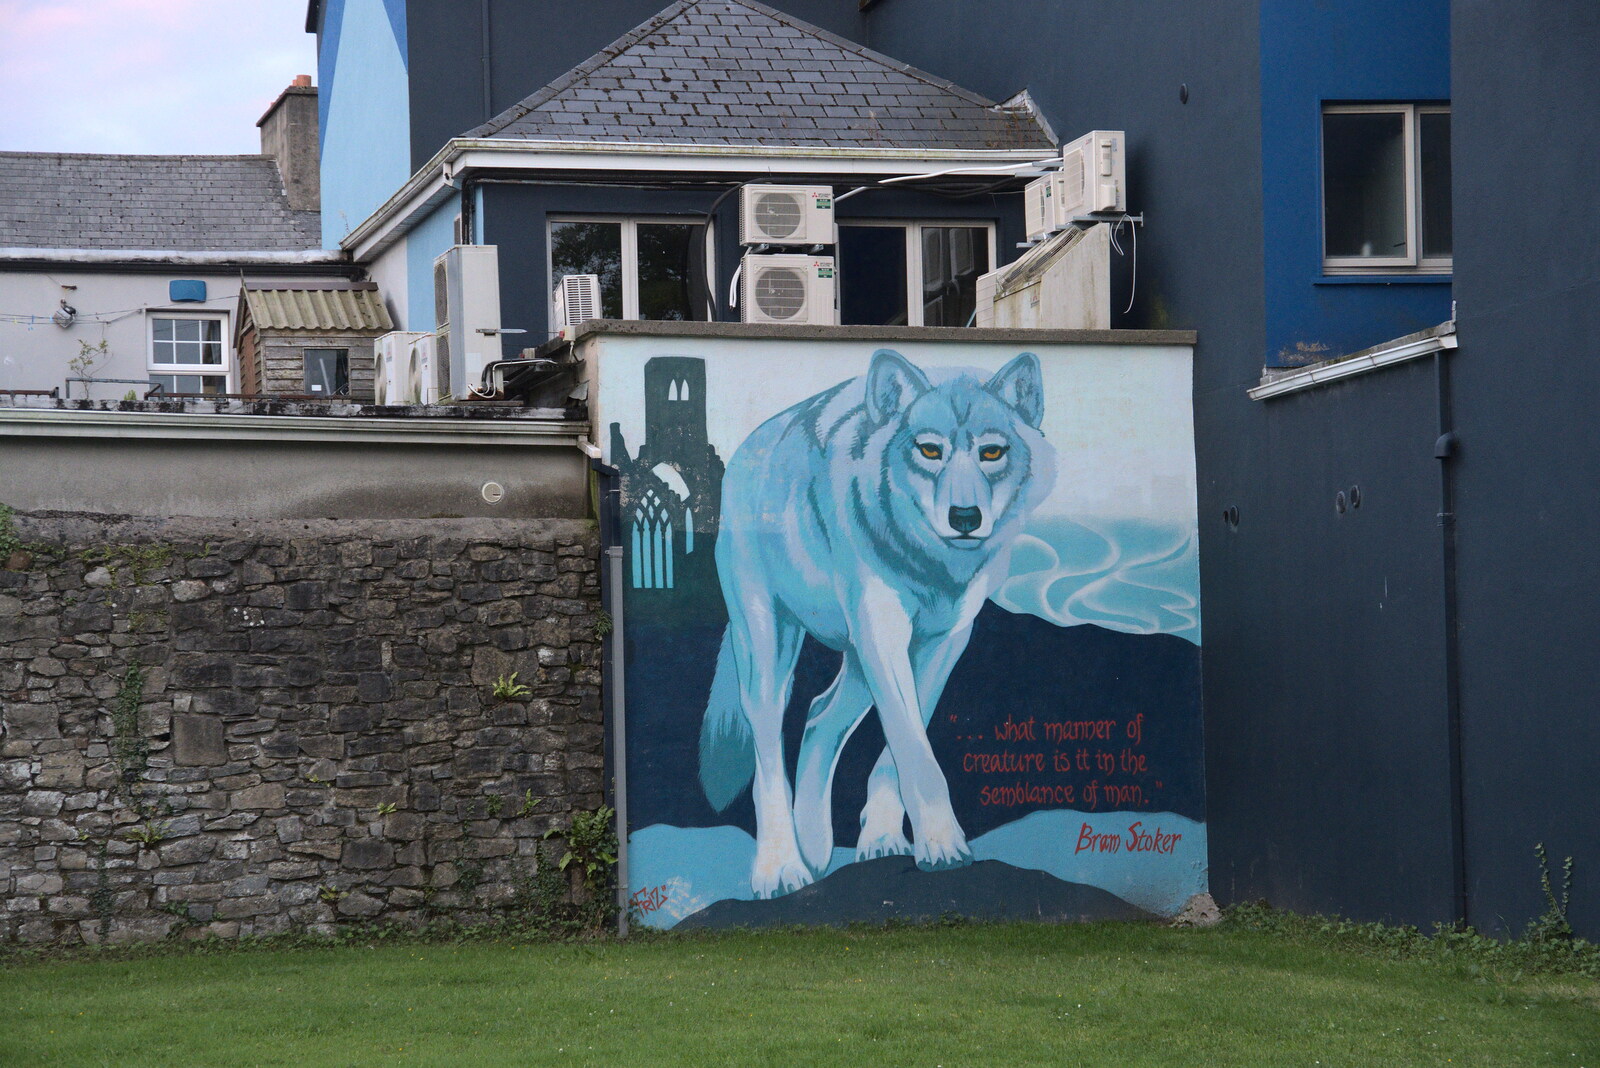 Pints of Guinness and Streedagh Beach, Grange and Sligo, Ireland - 9th August 2021: A Bram Stoker mural